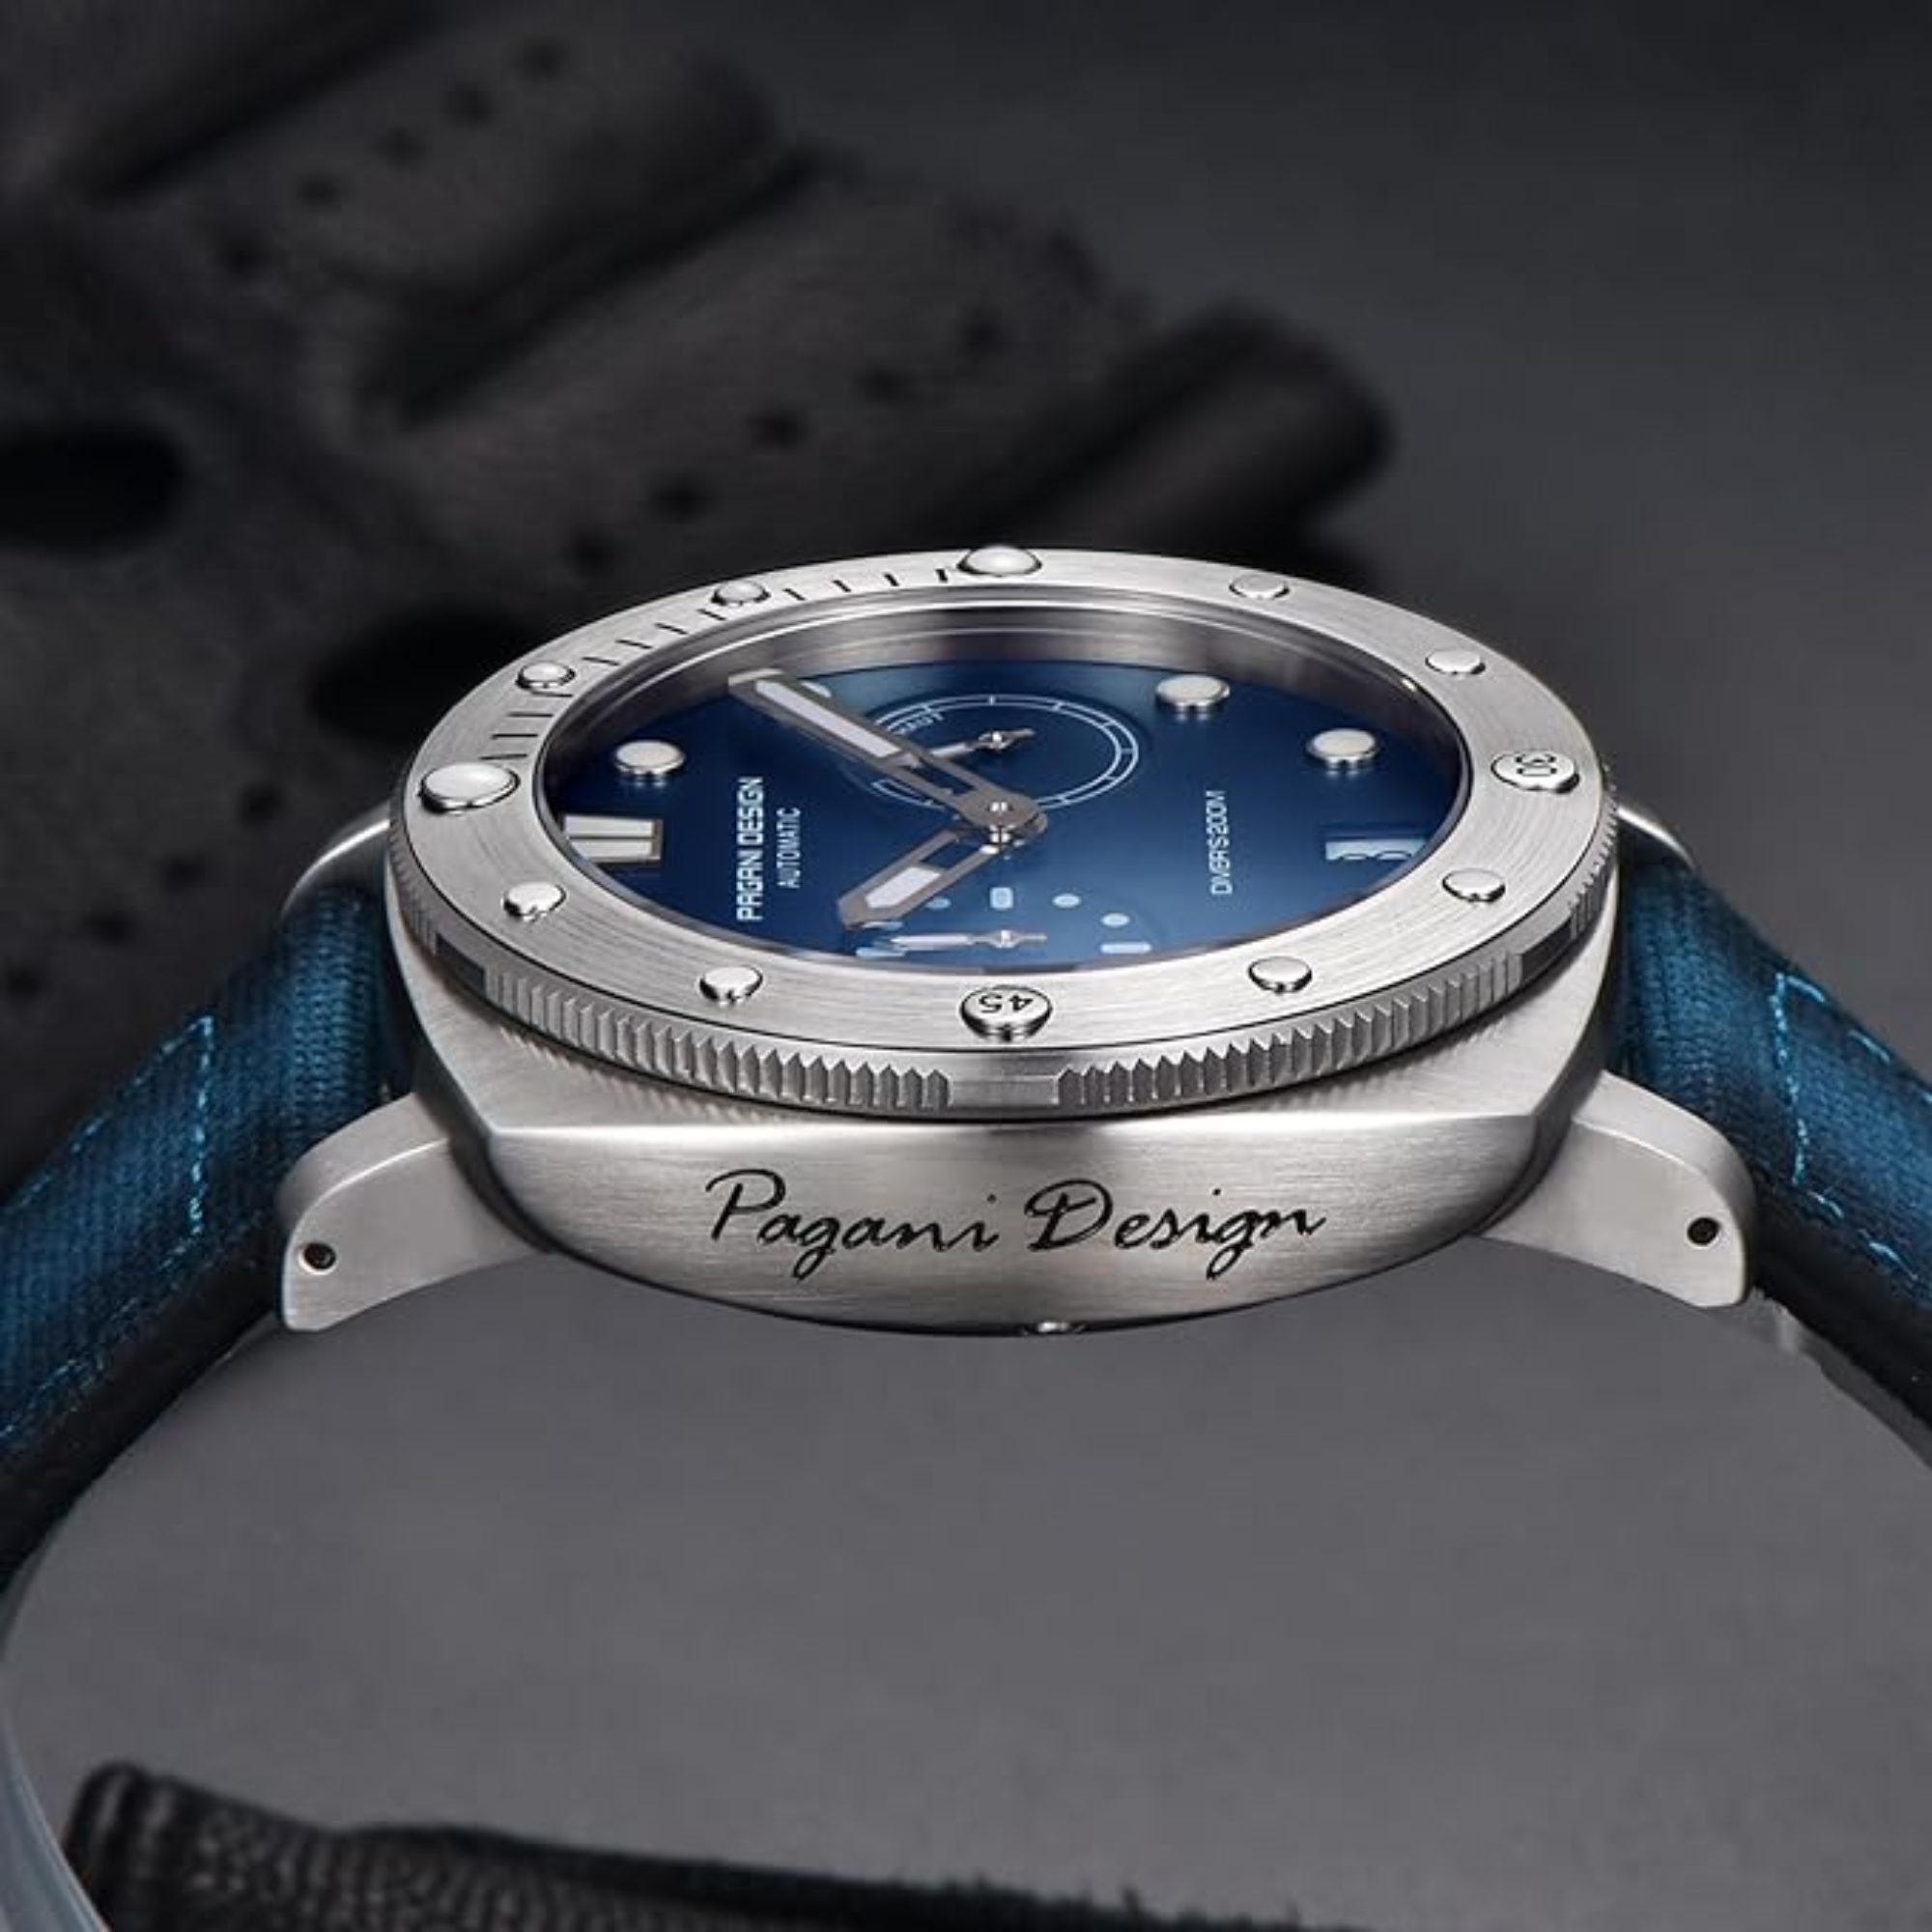 Pagani Design PD-1767 Men's Automatic Watch Waterproof - Blue